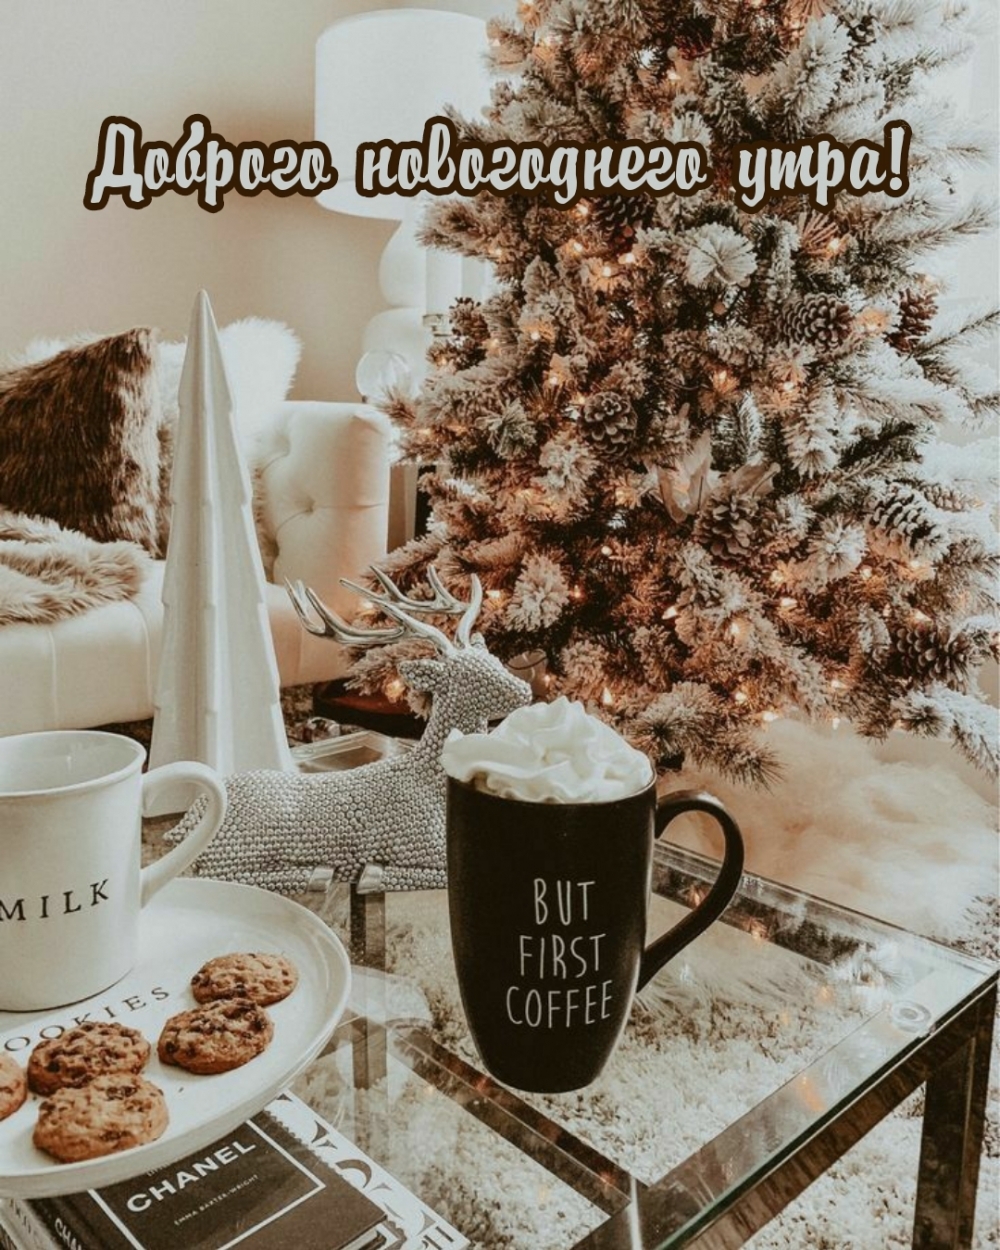 Доброго новогоднего утра!.